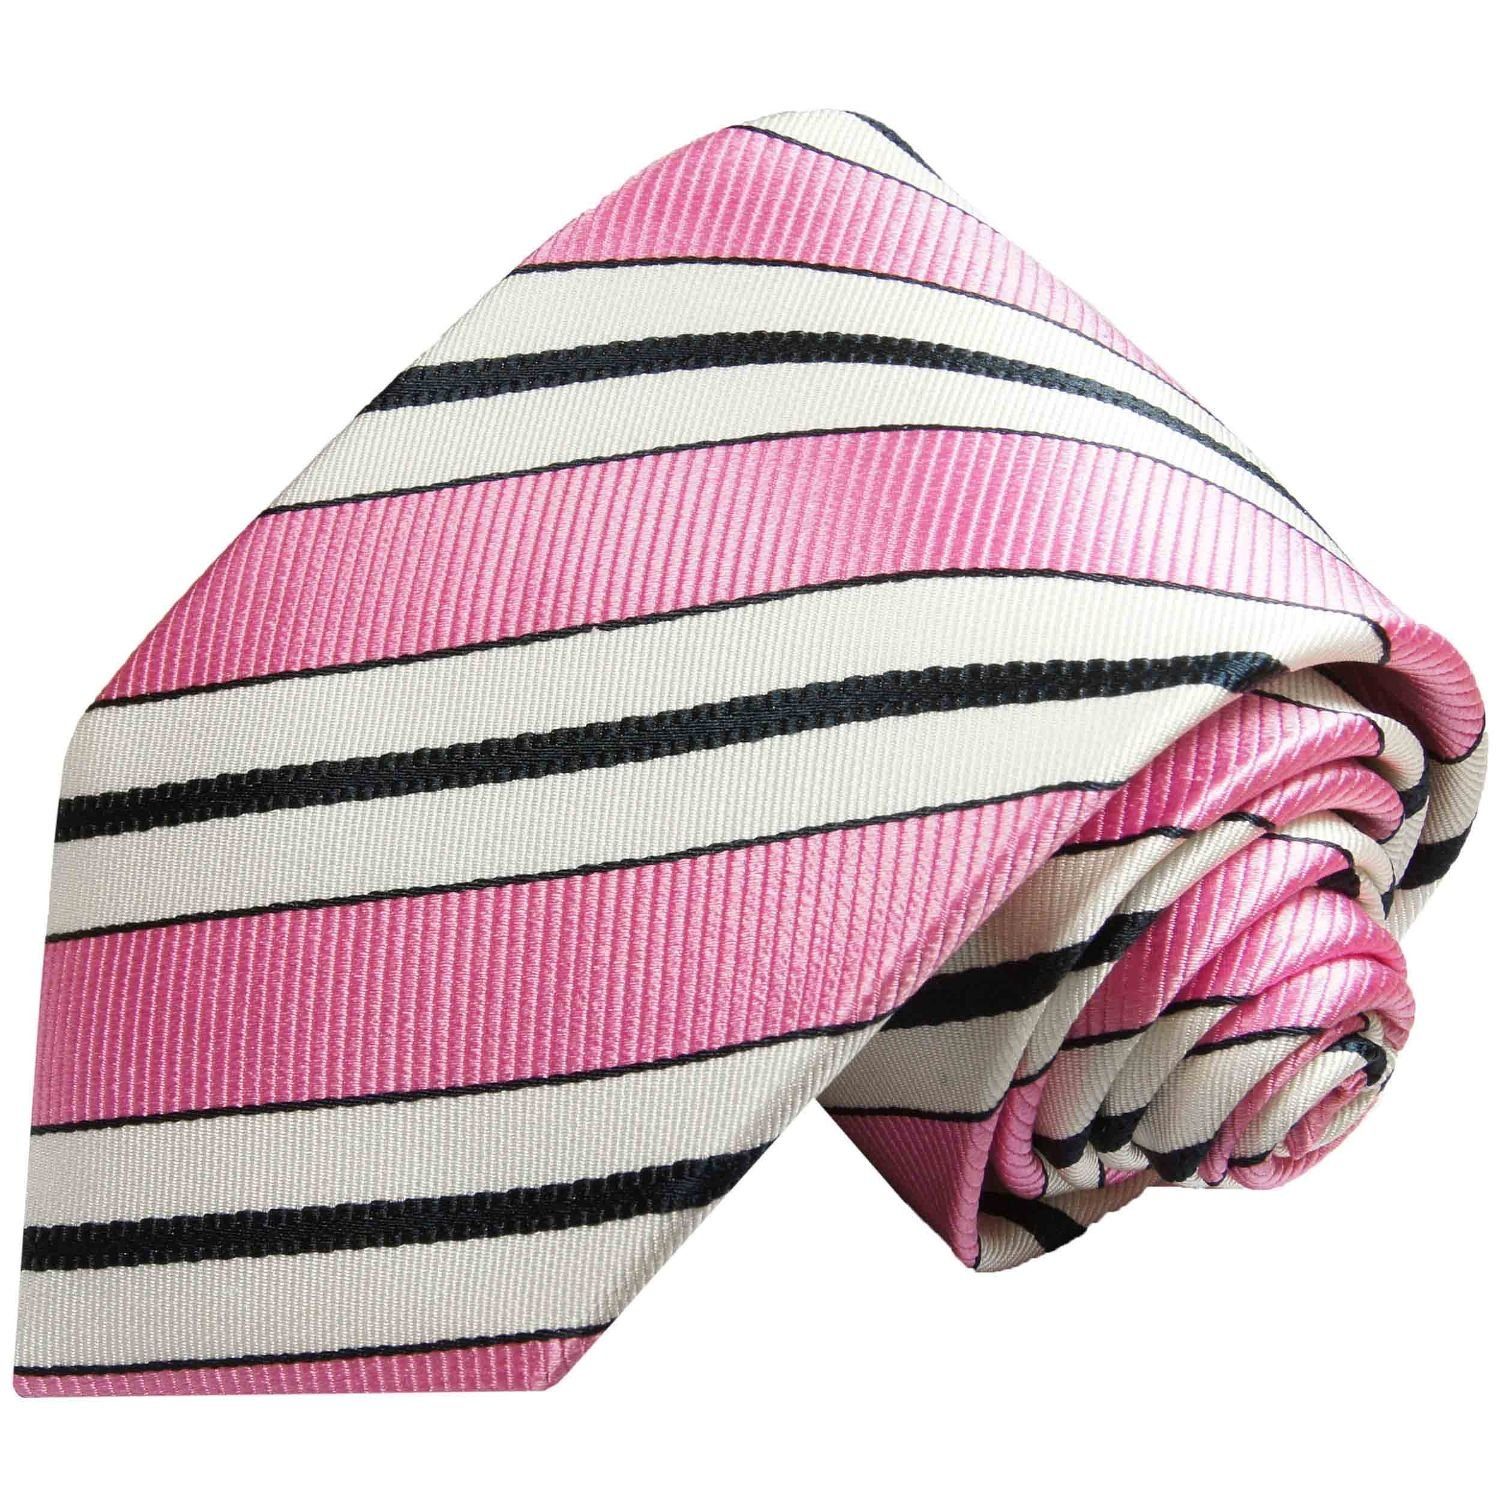 Paul Malone Krawatte Herren Seidenkrawatte Schlips modern gestreift 100% Seide Schmal (6cm), pink 110